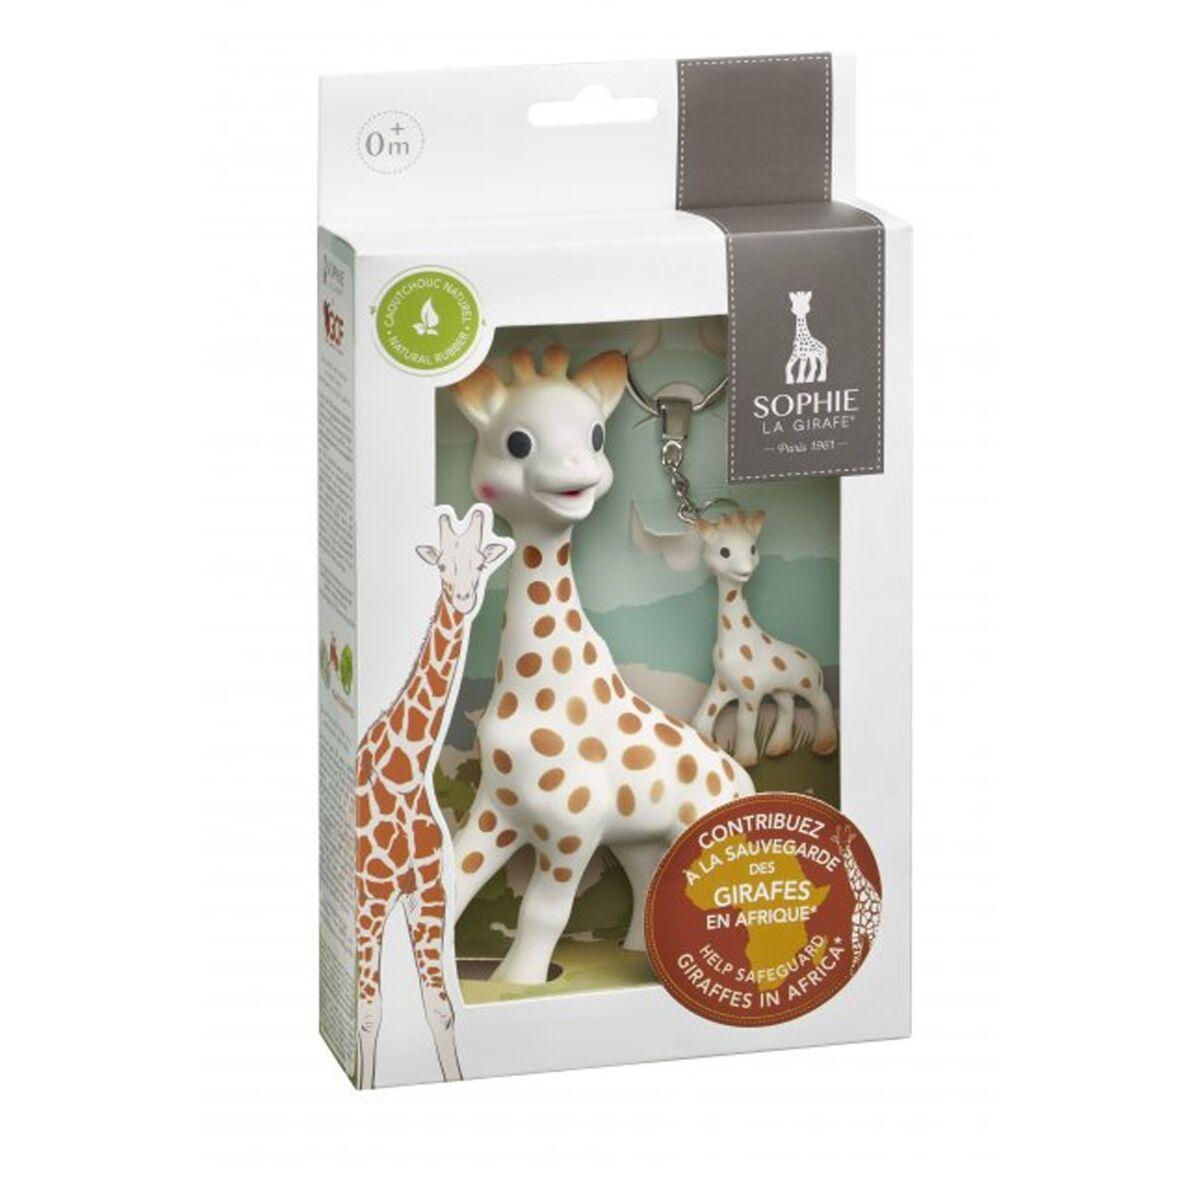 Vulli: Набор Sophie la girafe "Save Giraffes" Спасем Жирафов вместе